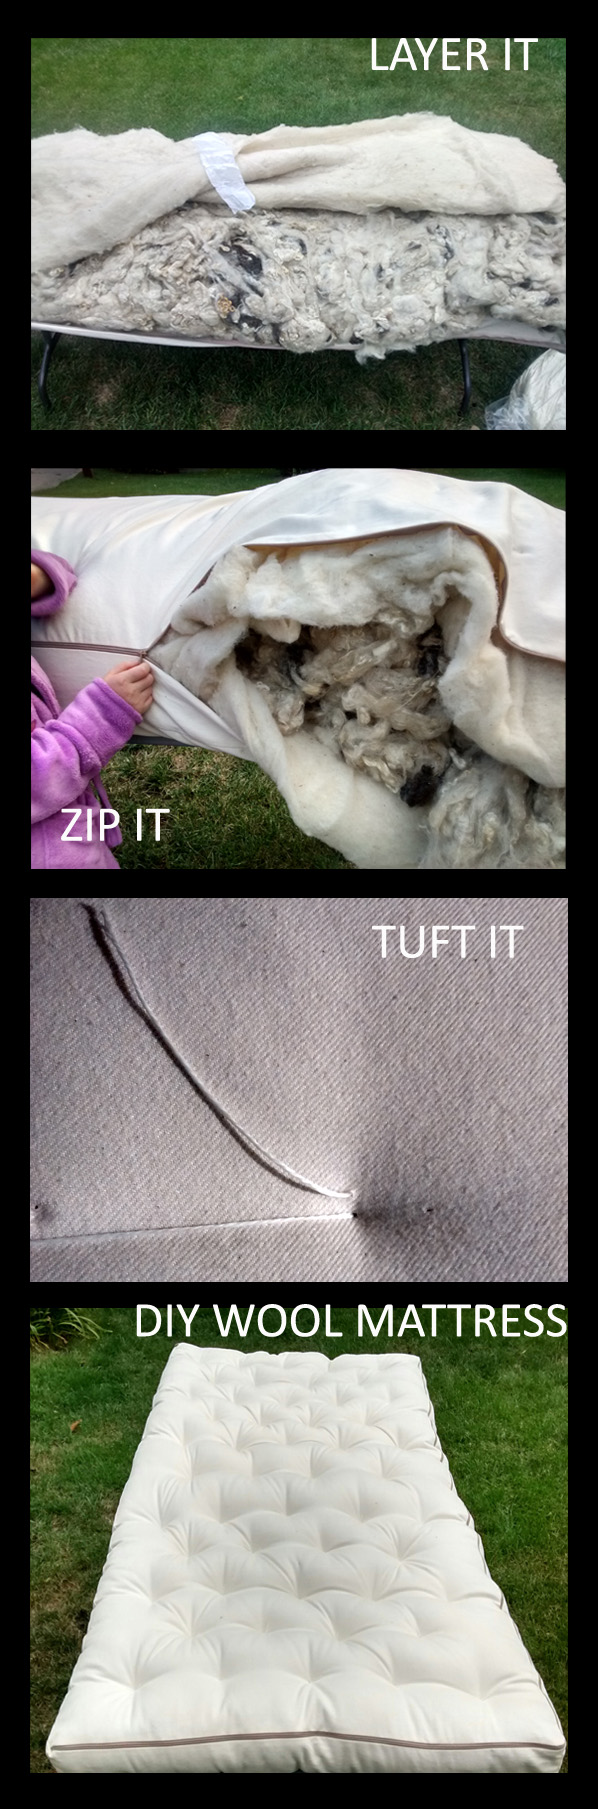 DIY your wool mattress